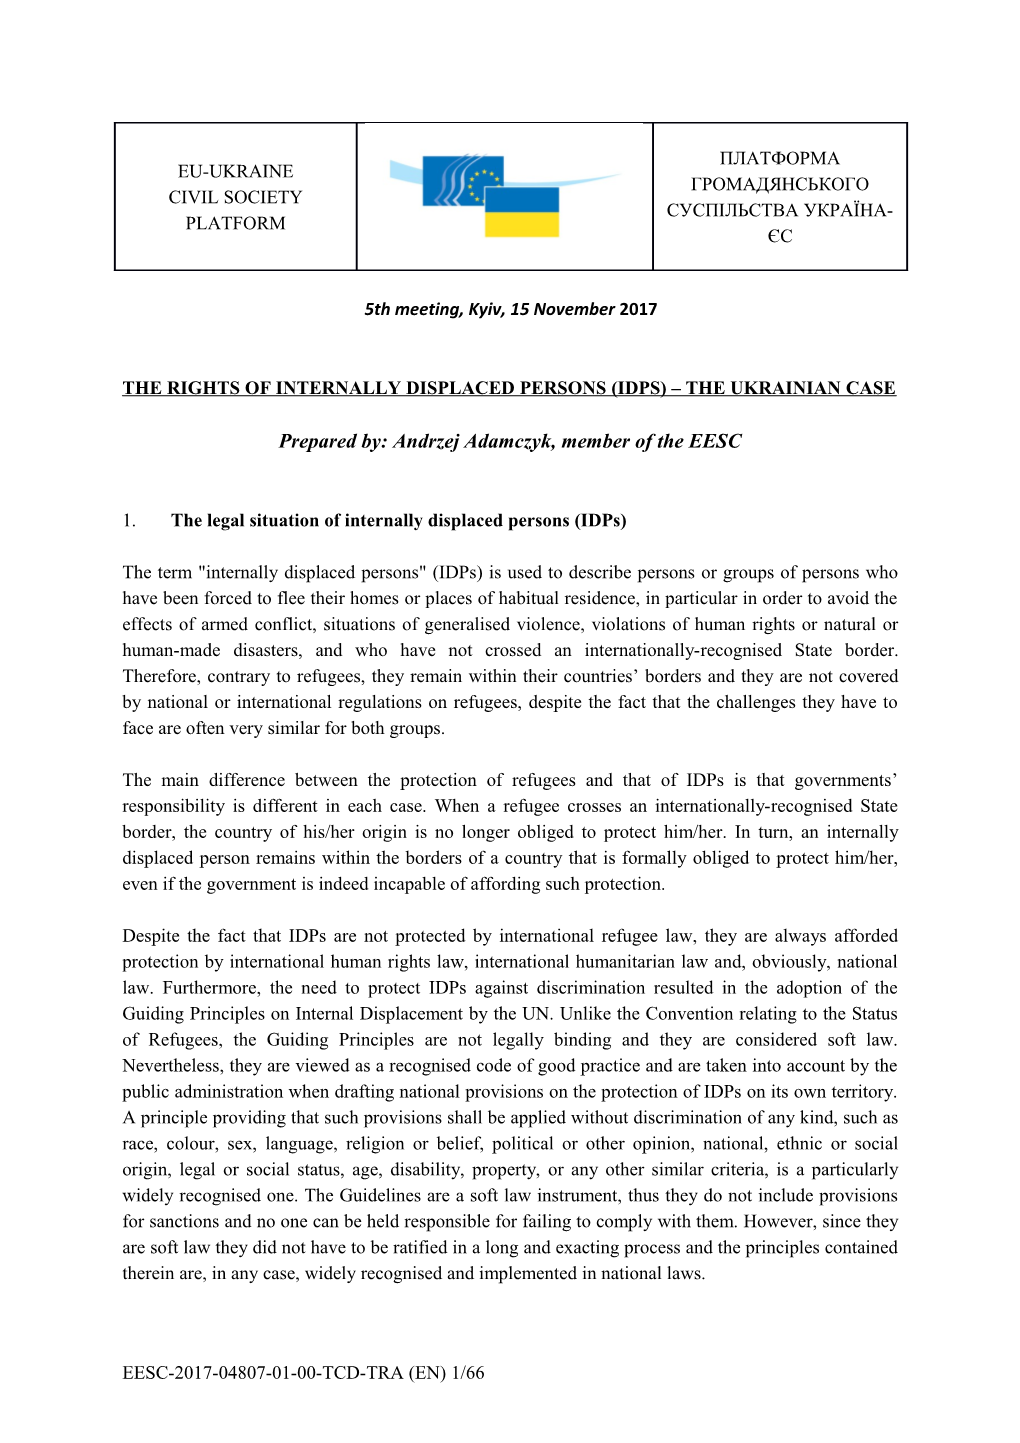 REX- Document for Meeting of the EU-Ukraine Civil Society Platform in Kyiv on 15 November